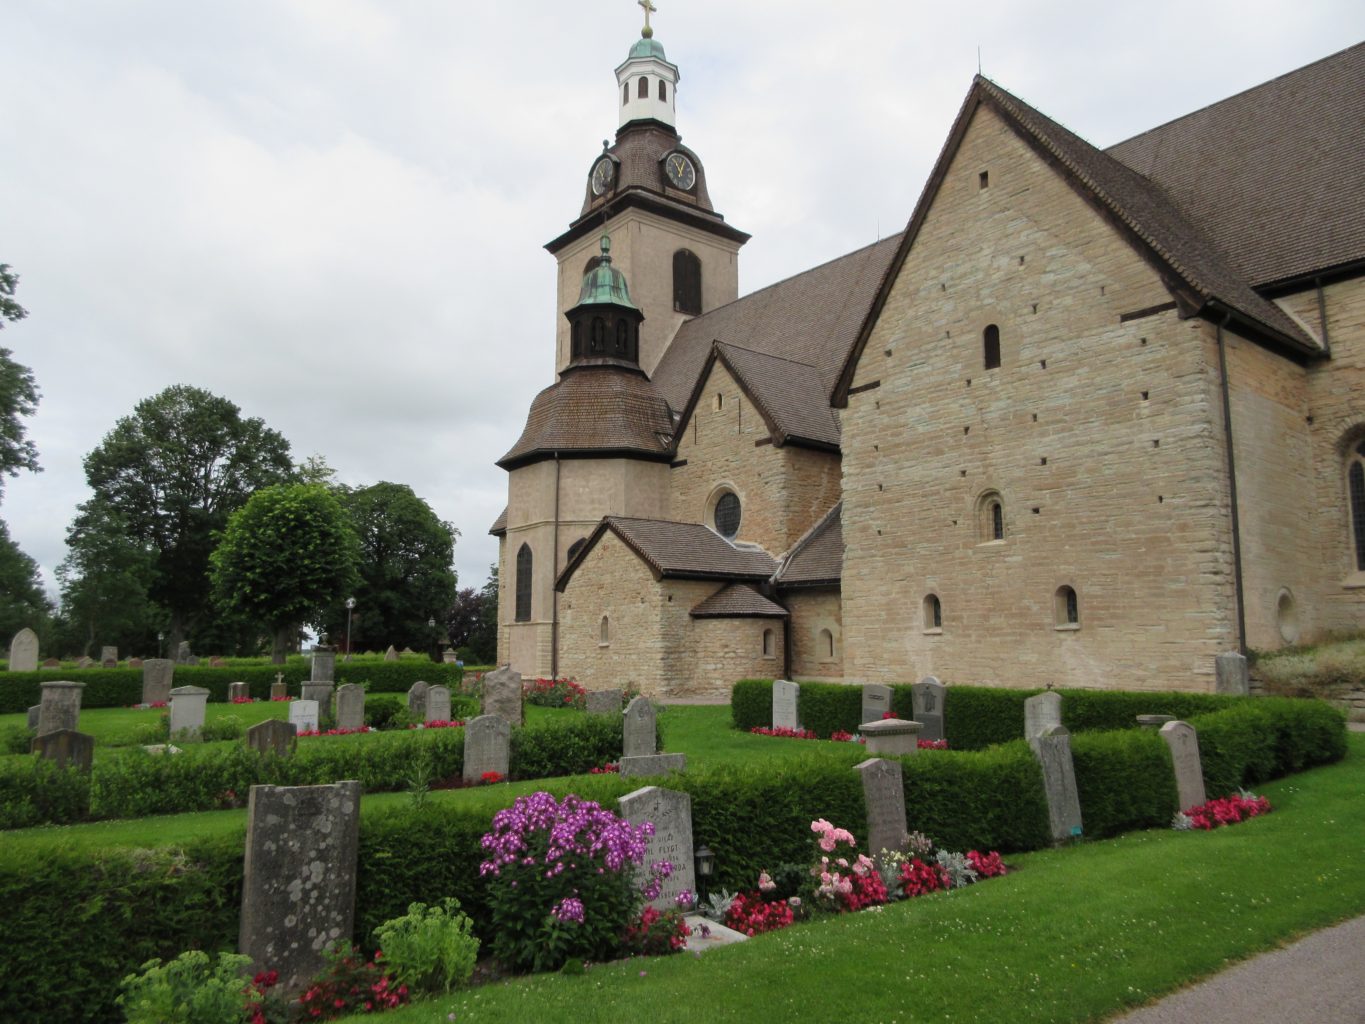 Daily walks to local sights like this 12th century church. * Photo: Heidi Sarna